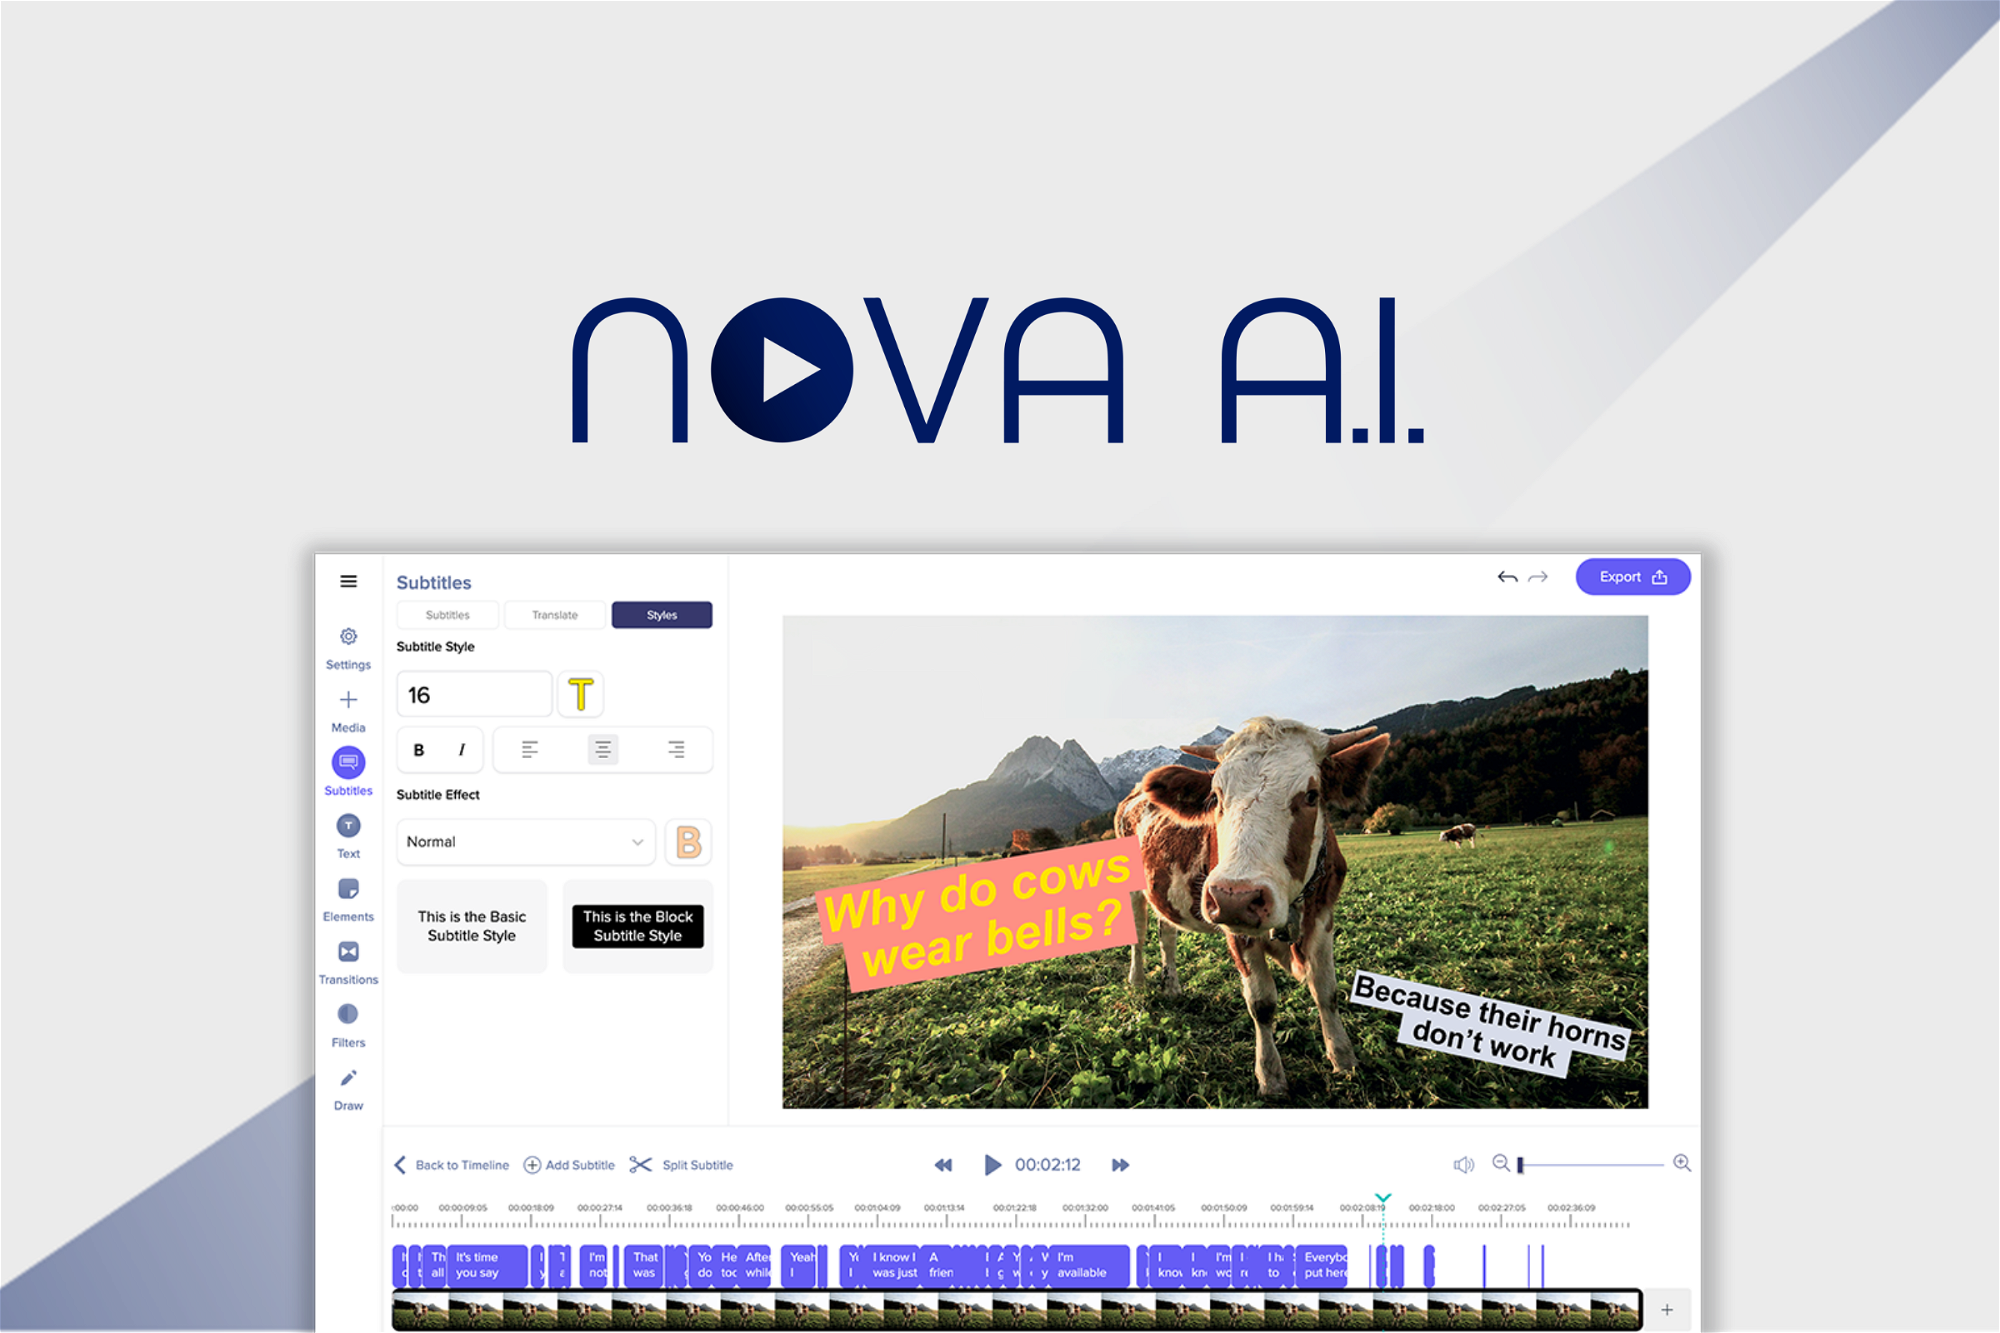 Nova A.I. - Automatically edit videos with AI | AppSumo